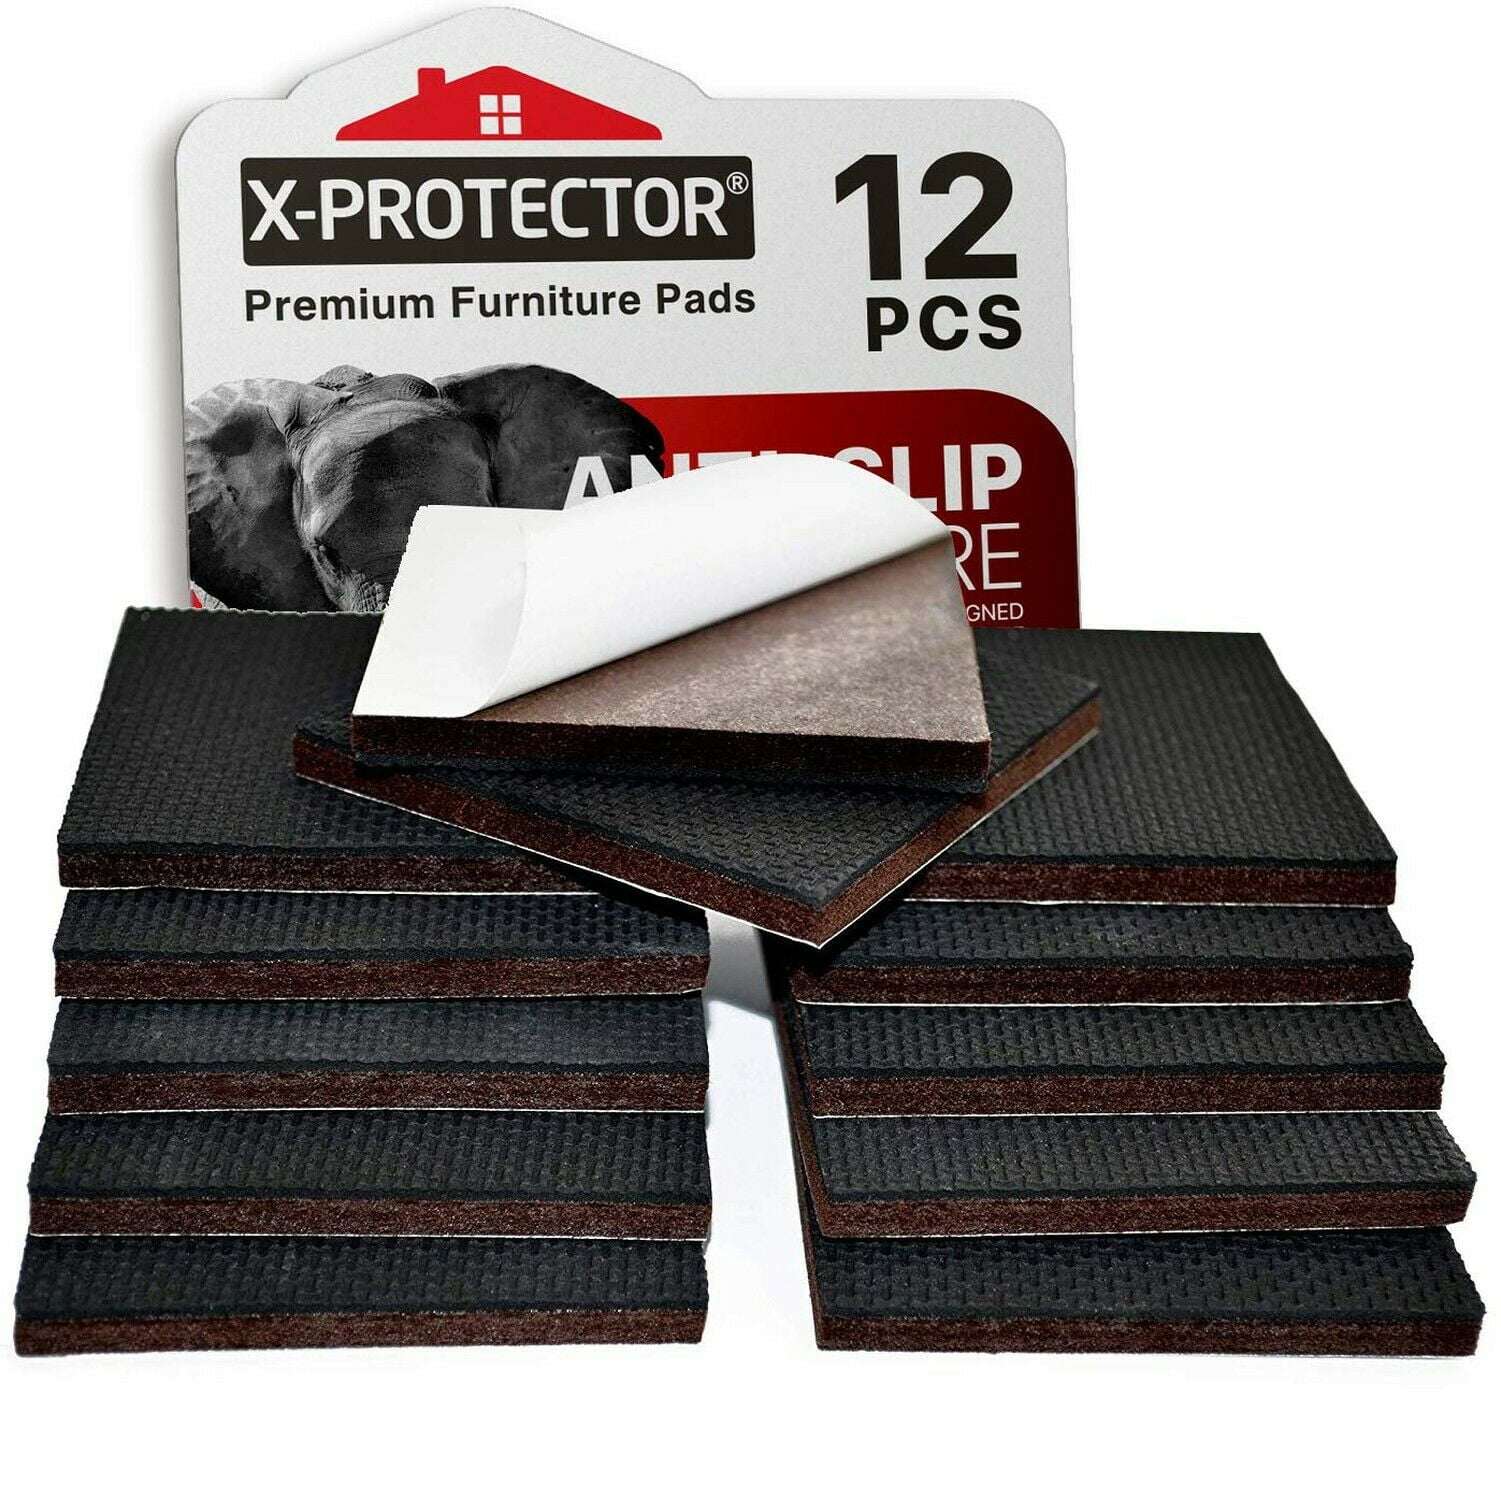 Grippers NON SLIP FURNITURE PADS X-PROTECTOR PREMIUM 12 pcs 3” Furniture Pad 